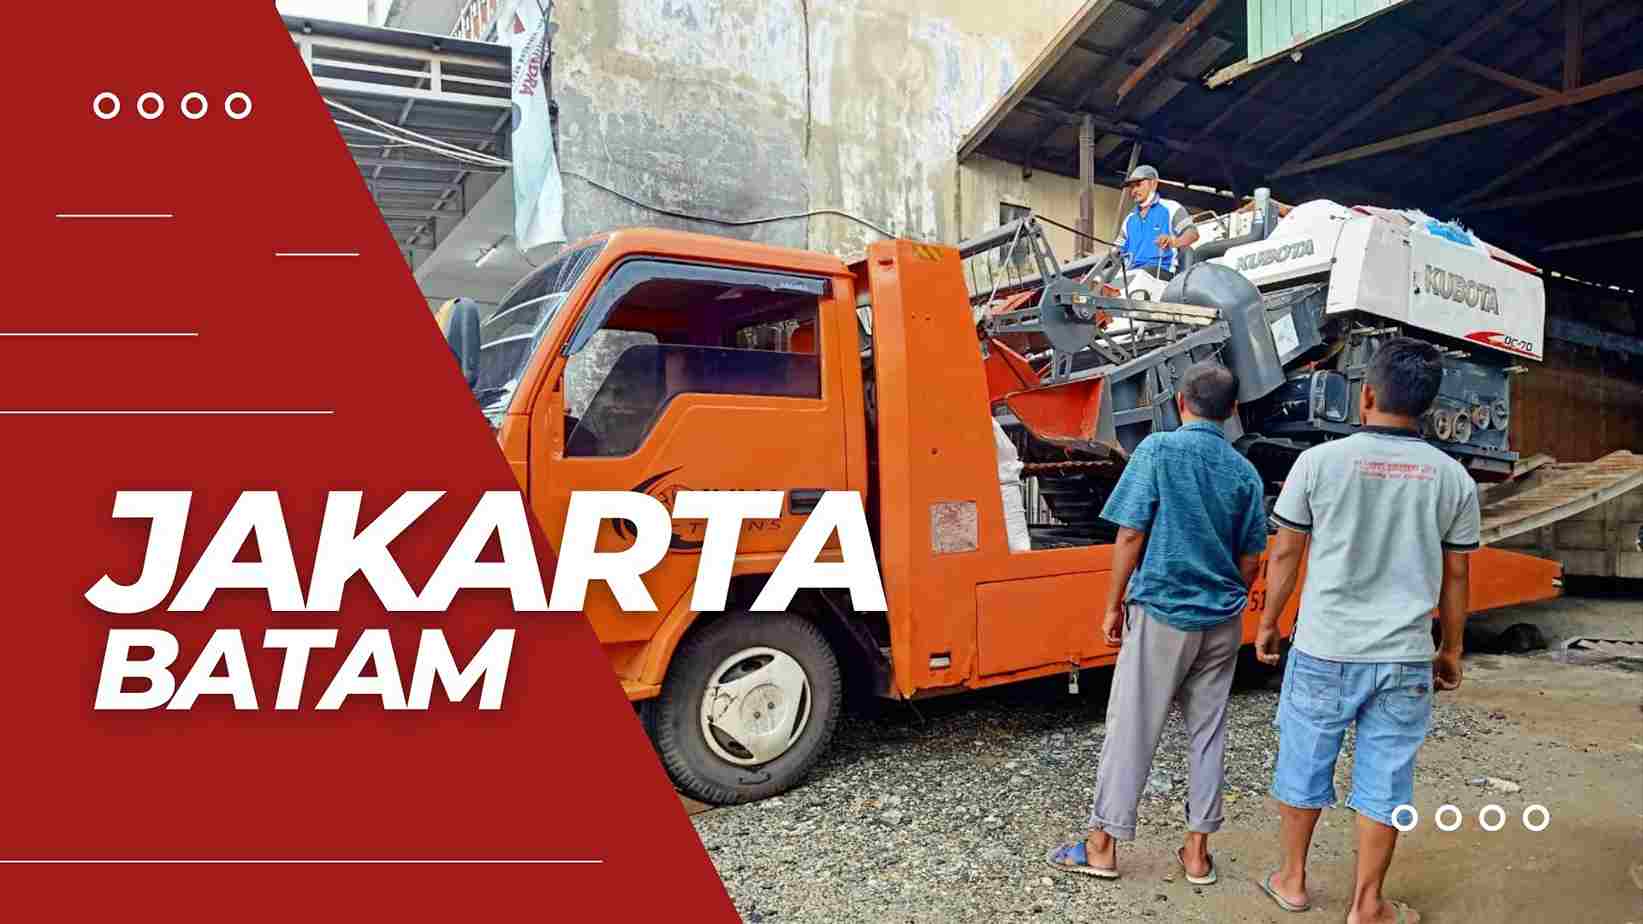 Ekspedisi Via Container Jakarta Batam